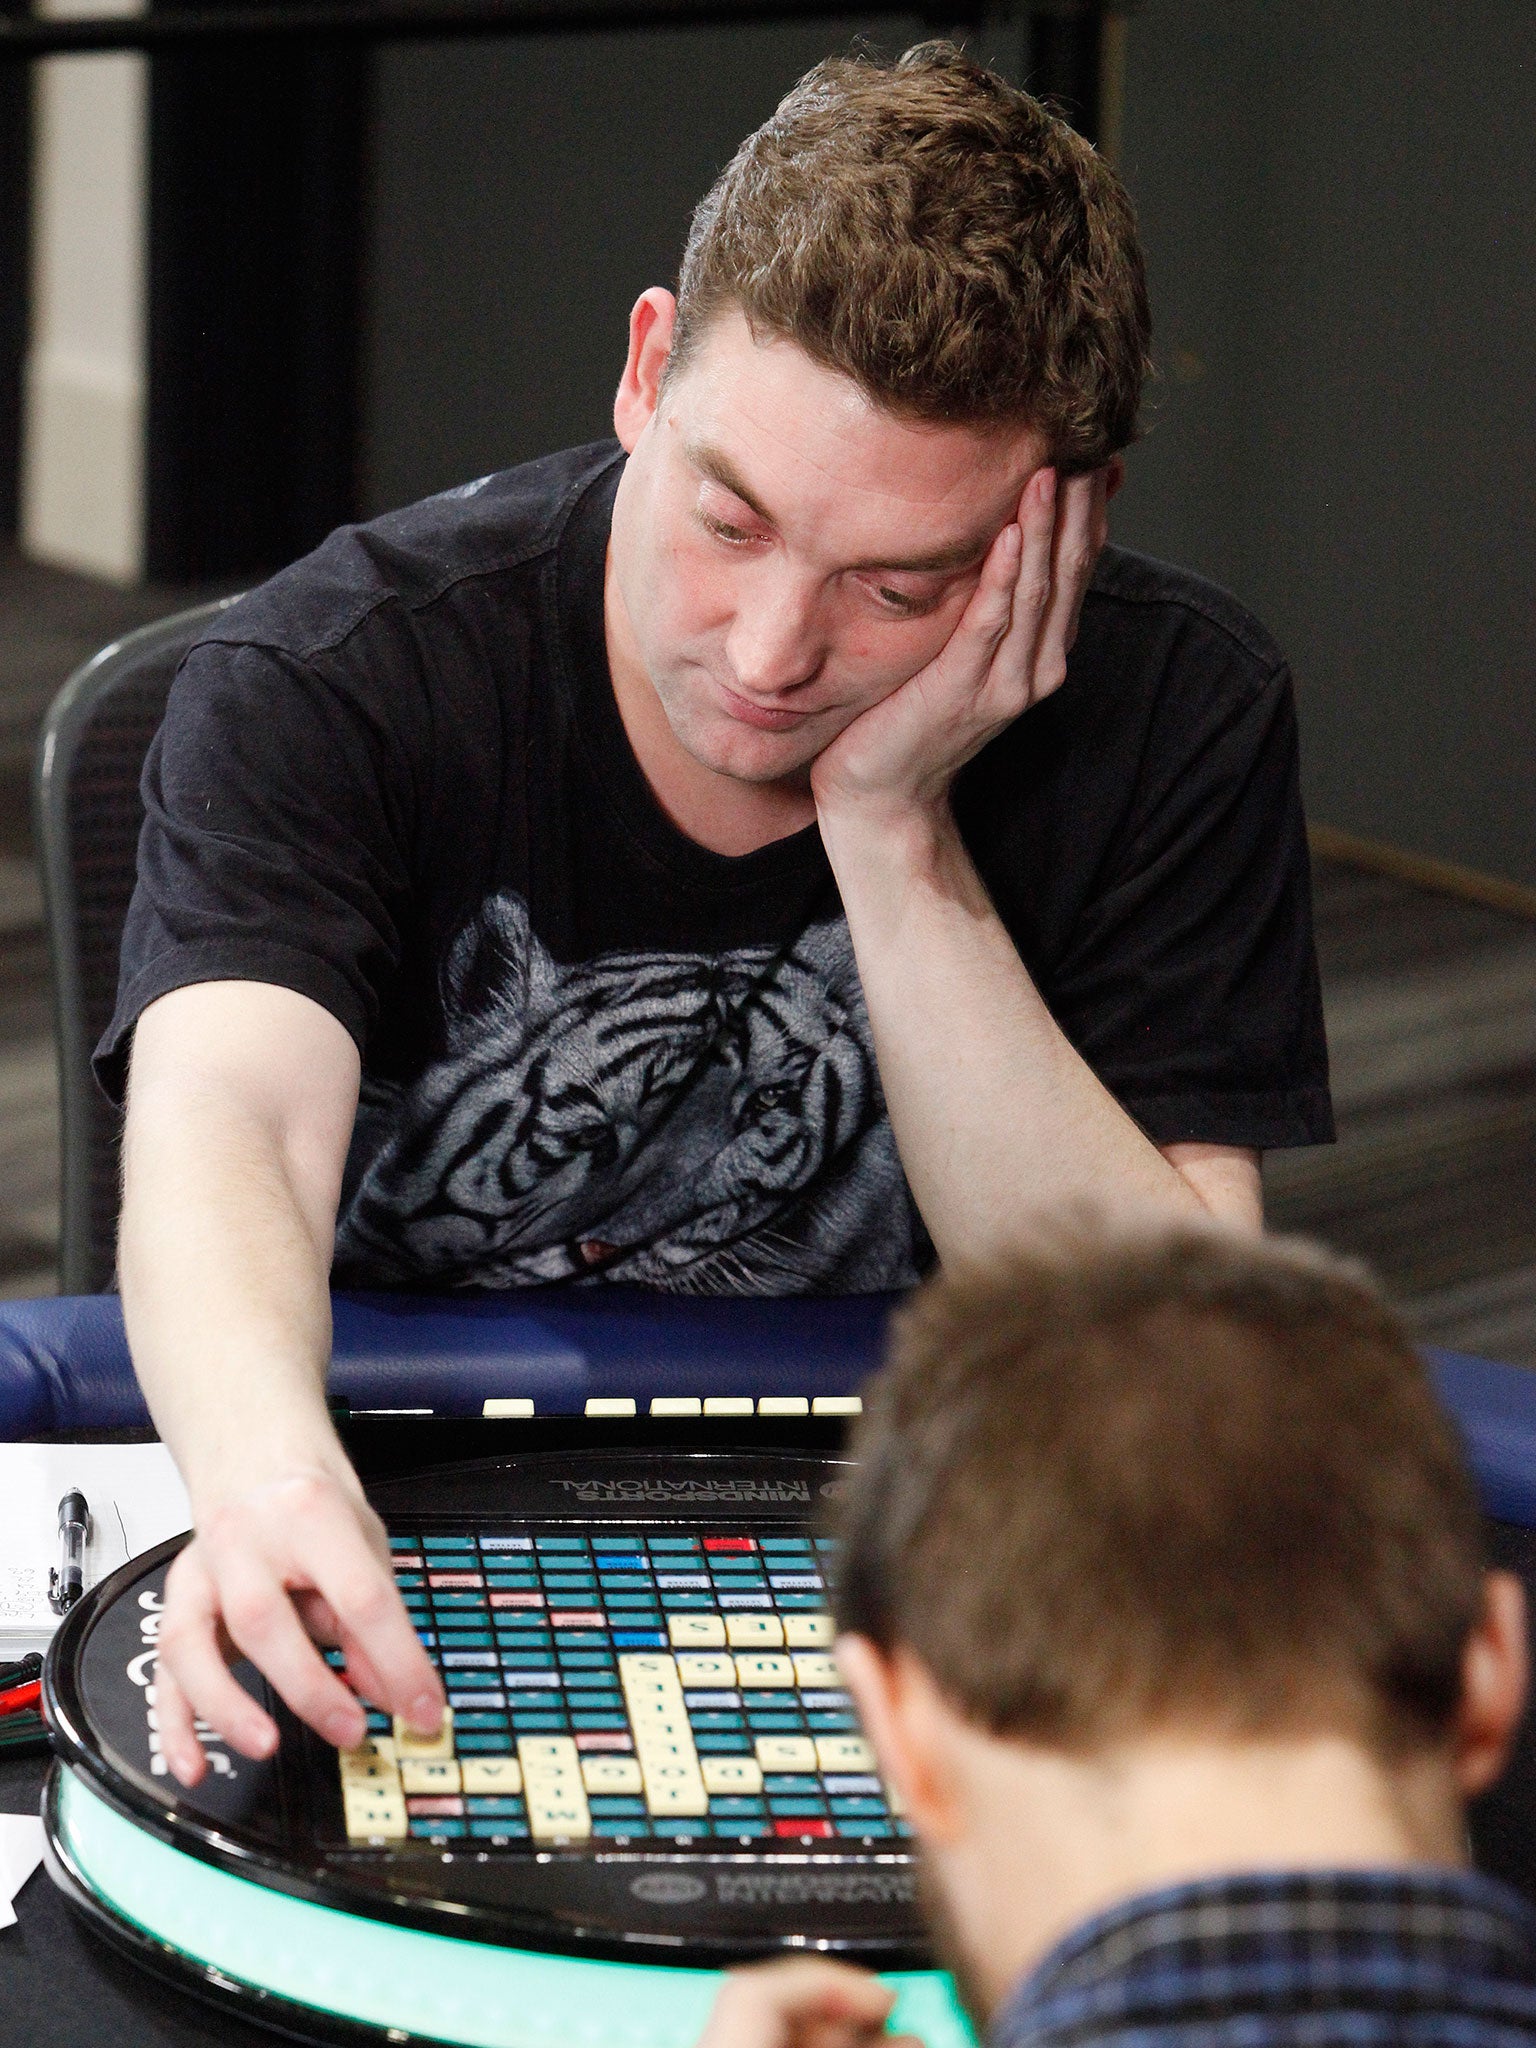 Scrabble champion Craig Beevers, 33, top, beat Chris Lipe from Clinton, New York